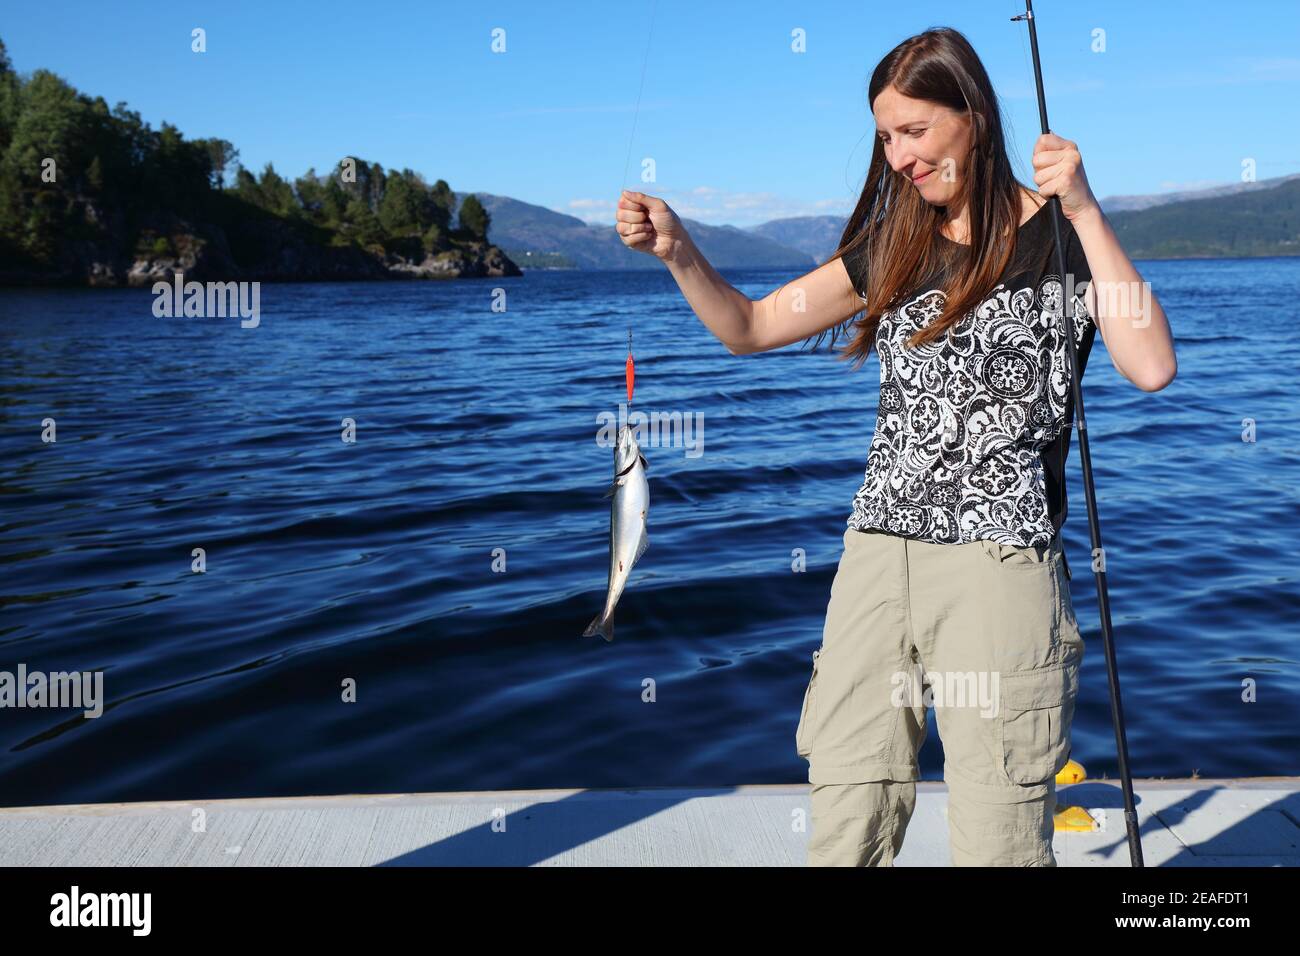 Norway fishing - freshly caught fish. Female angler with a coalfish in Knarvik, Vestland. Stock Photo